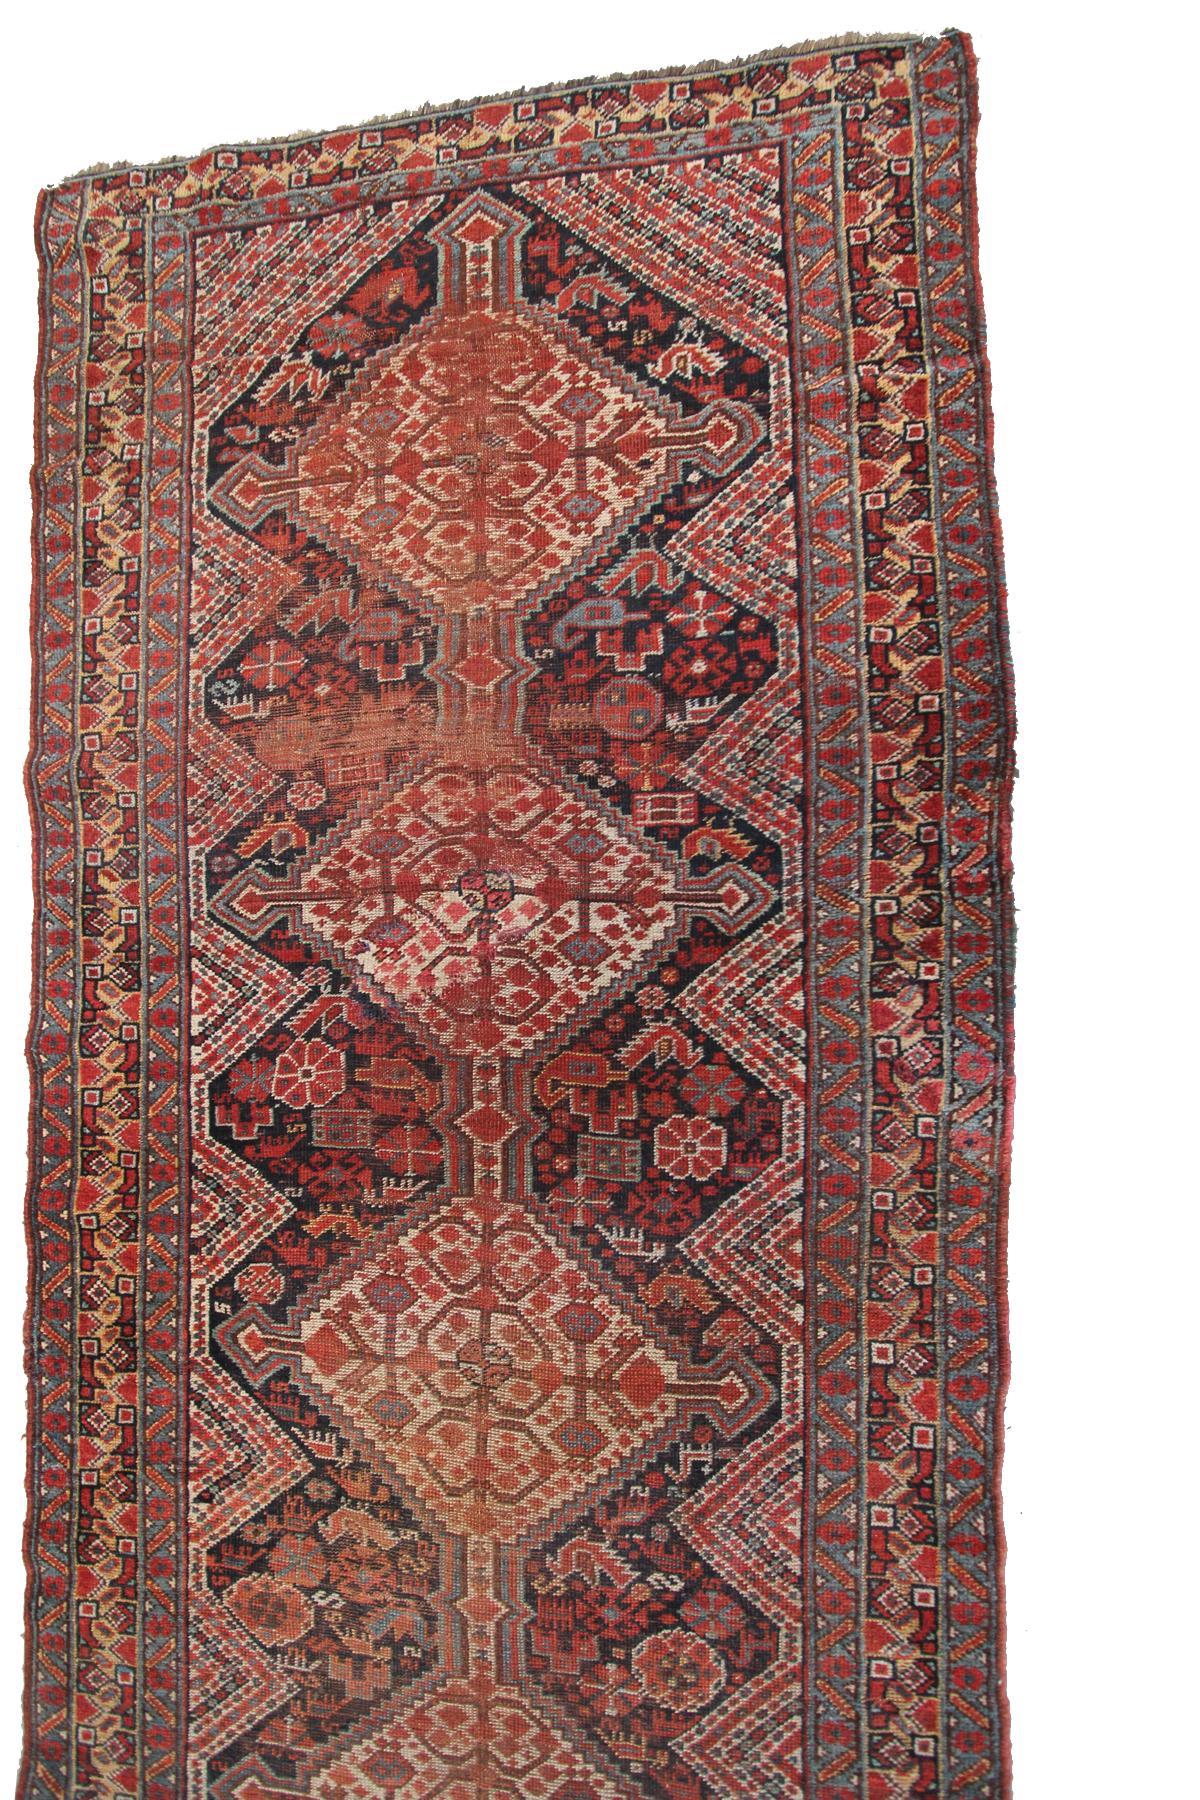 Wool Antique Caucasian Khamseh Caucasian Kazak Rug Runner Geometric, 1890 For Sale